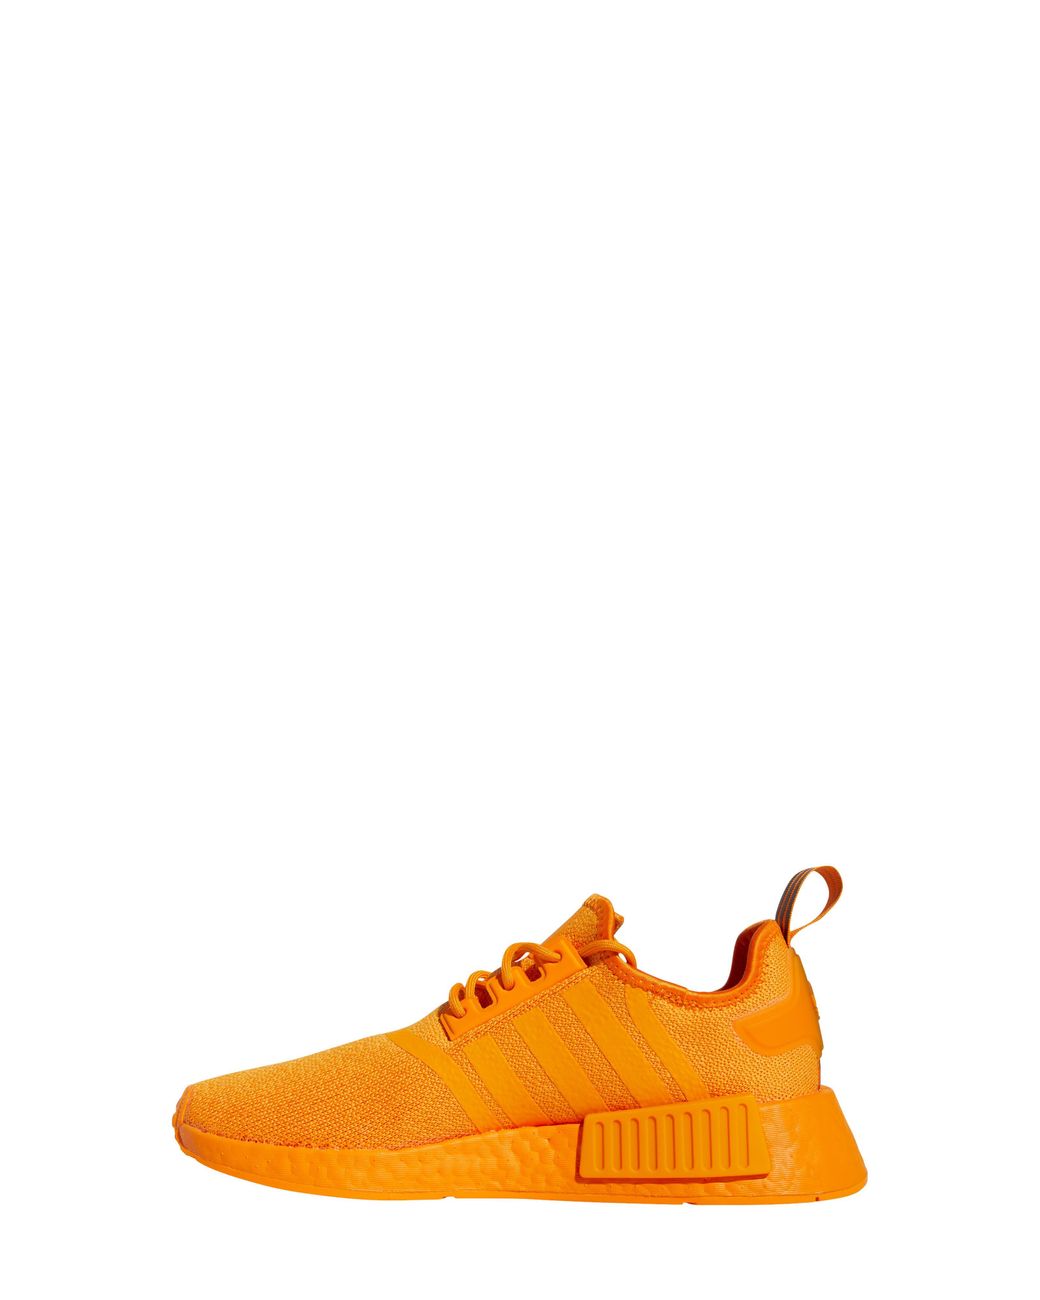 adidas Nmd R1 Sneaker in Orange | Lyst